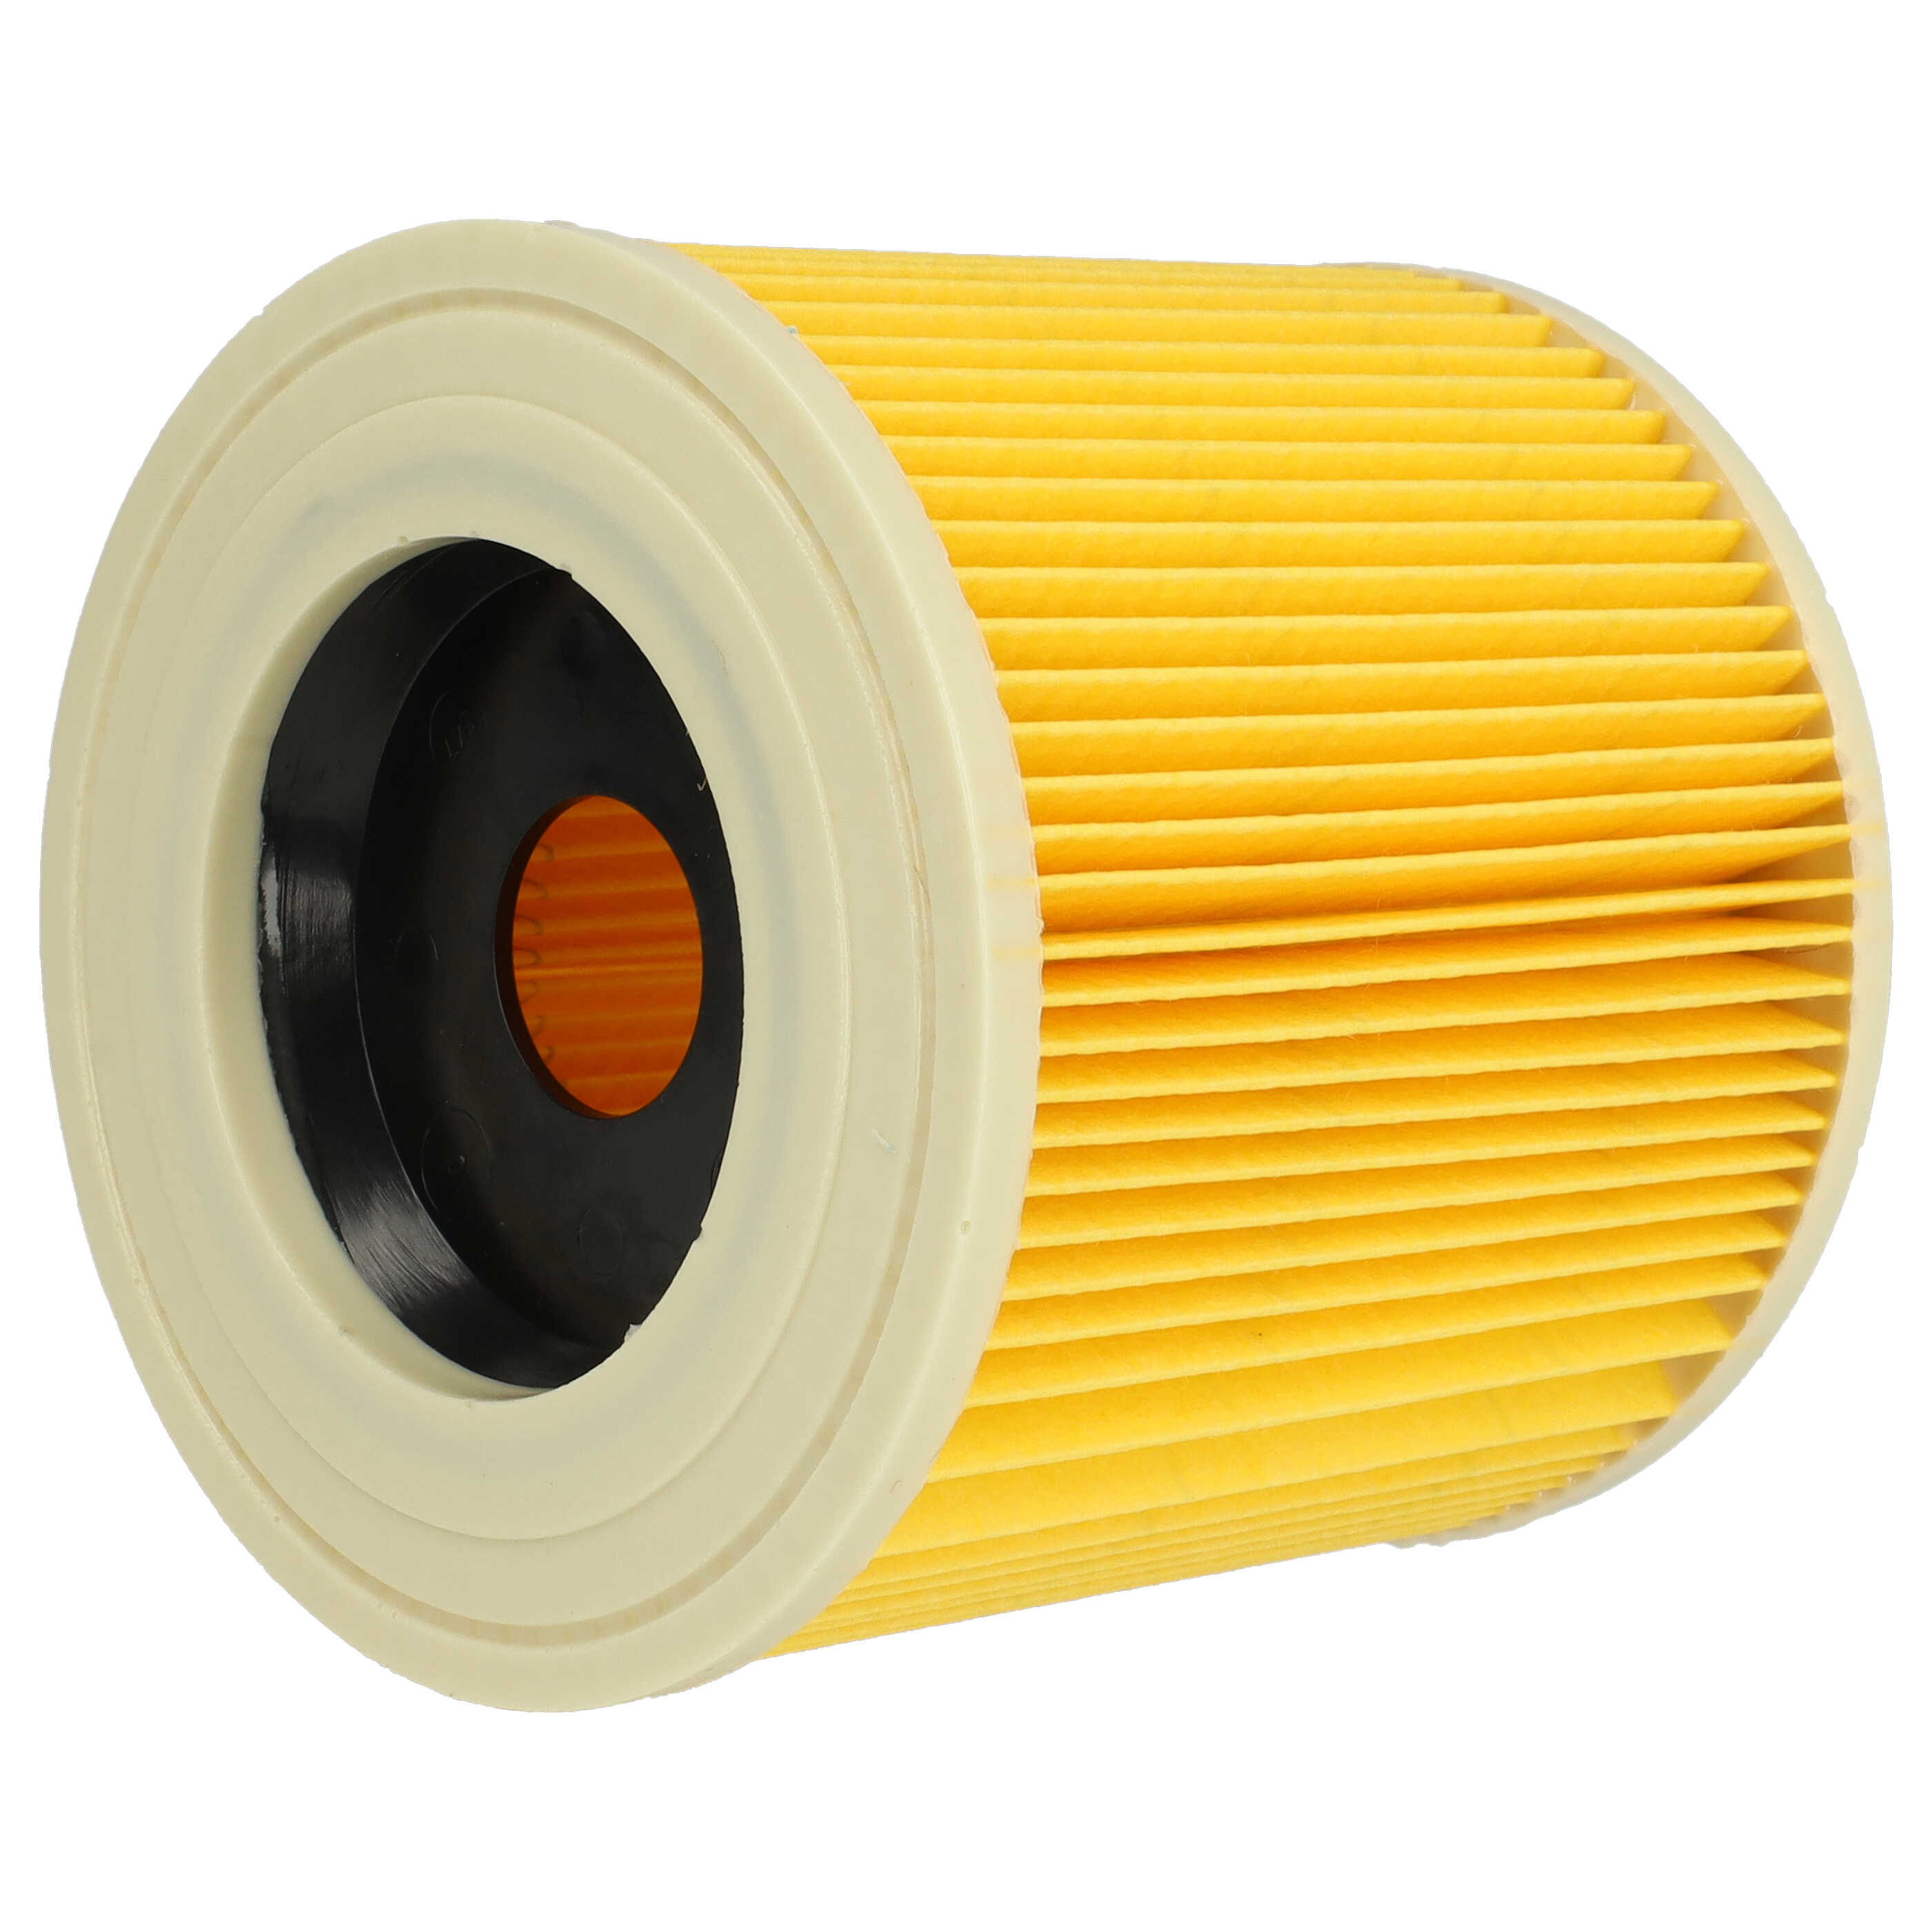 3x cartridge filter replaces Kärcher 2.863-303.0, 6.414-552.0, 6.414-547.0 for PowerPlusVacuum Cleaner, yellow